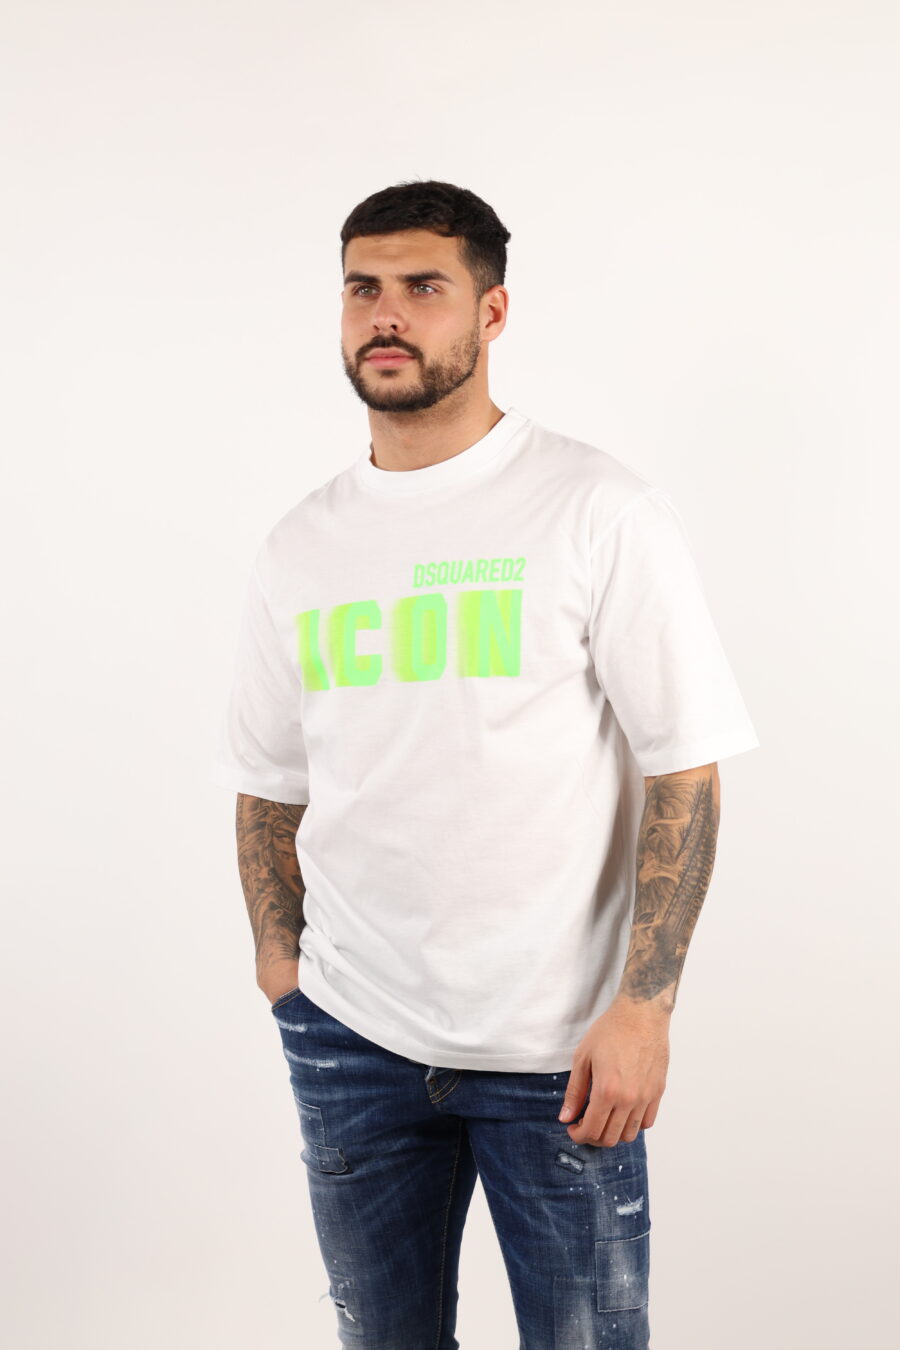 Camiseta blanca "oversize" con maxilogo "icon" verde neon borroso - 109142